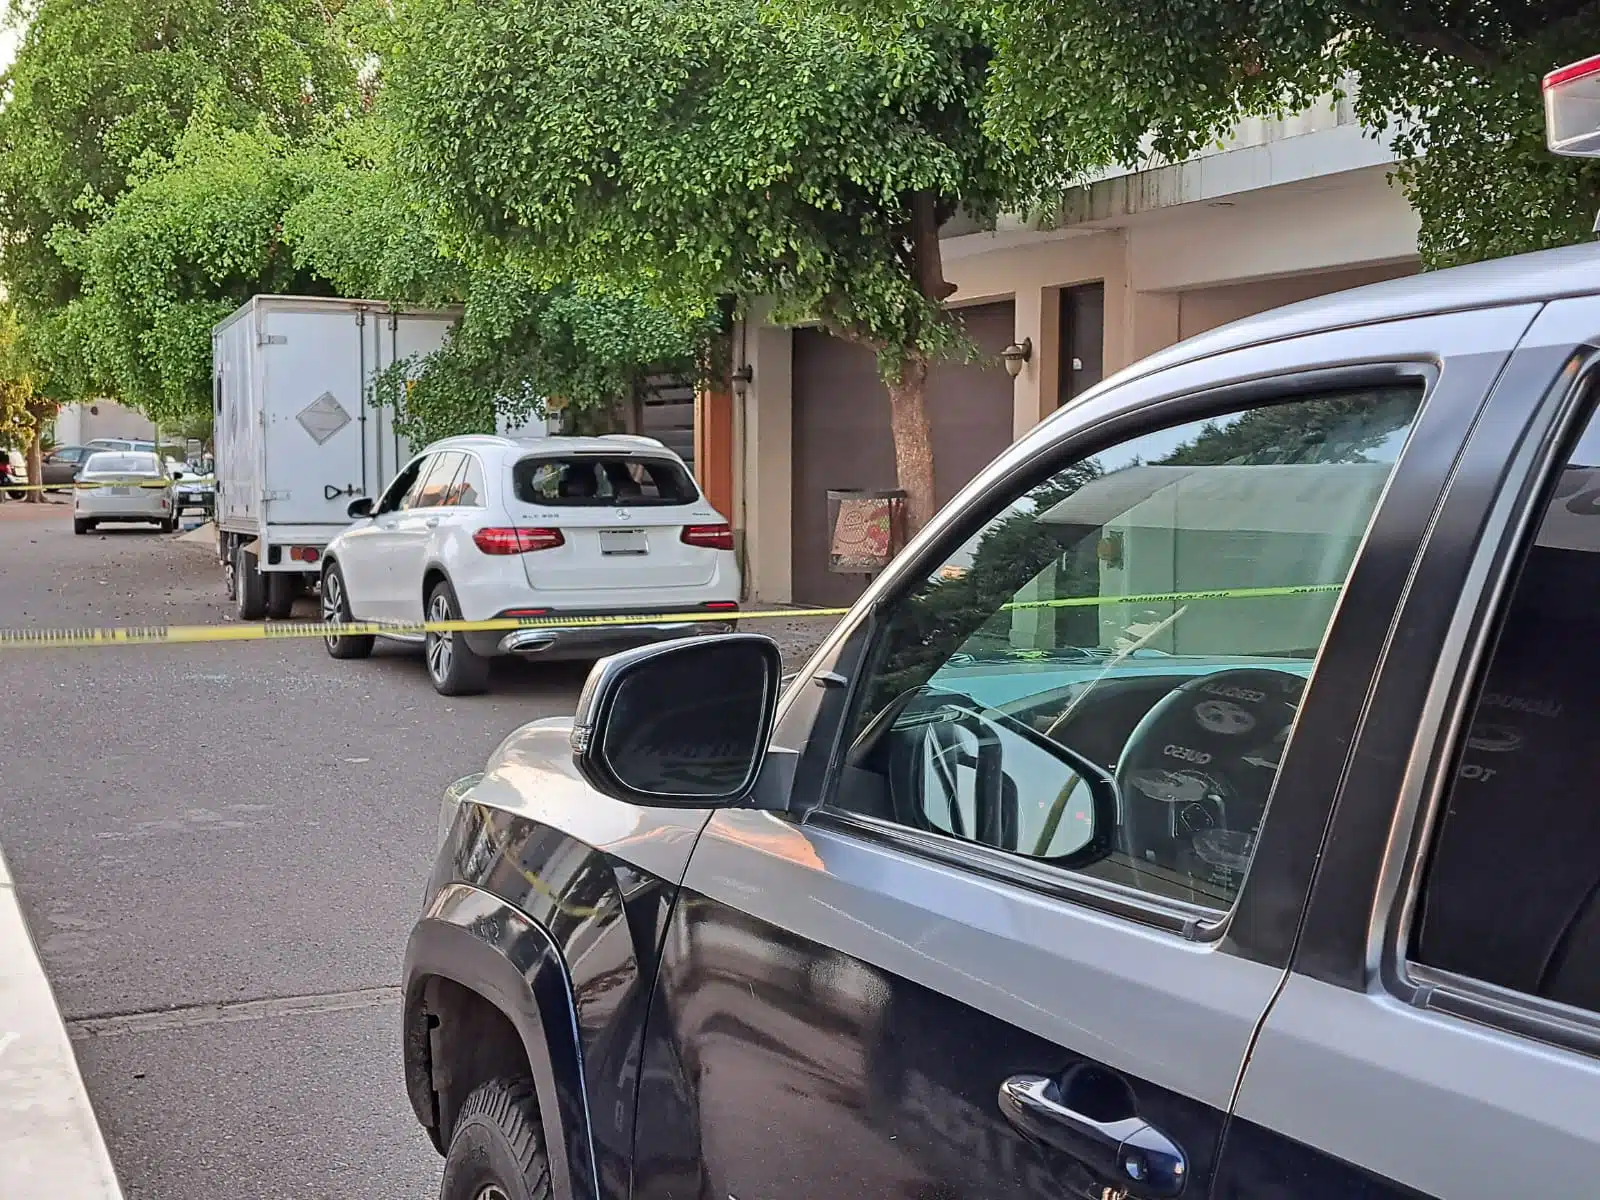 Patrulla municipal y auto Mercedes Benz en escena de un crimen en Culiacán